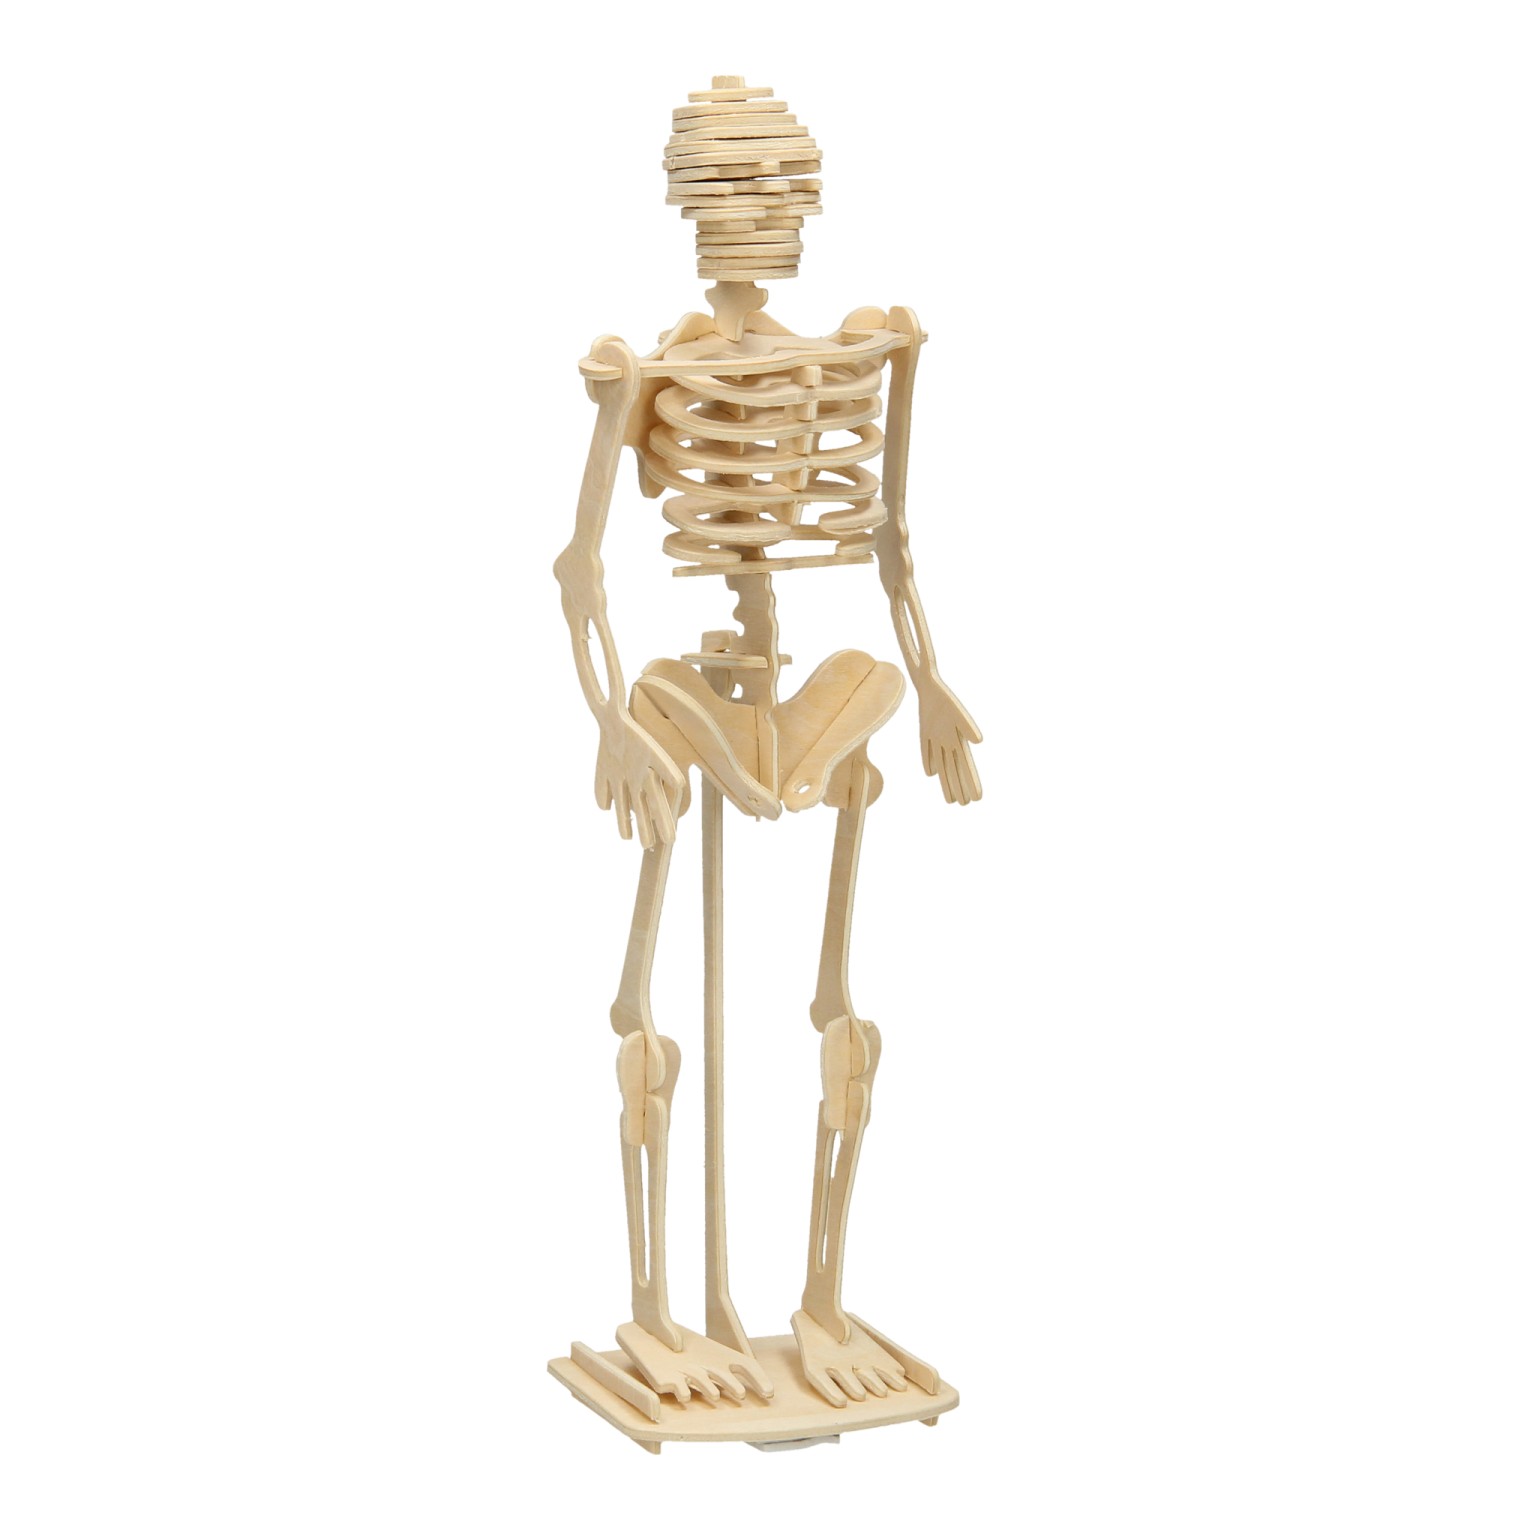 Petulance Krachtcel verbannen Houten Bouwpakket - Skelet online kopen? | Lobbes Speelgoed